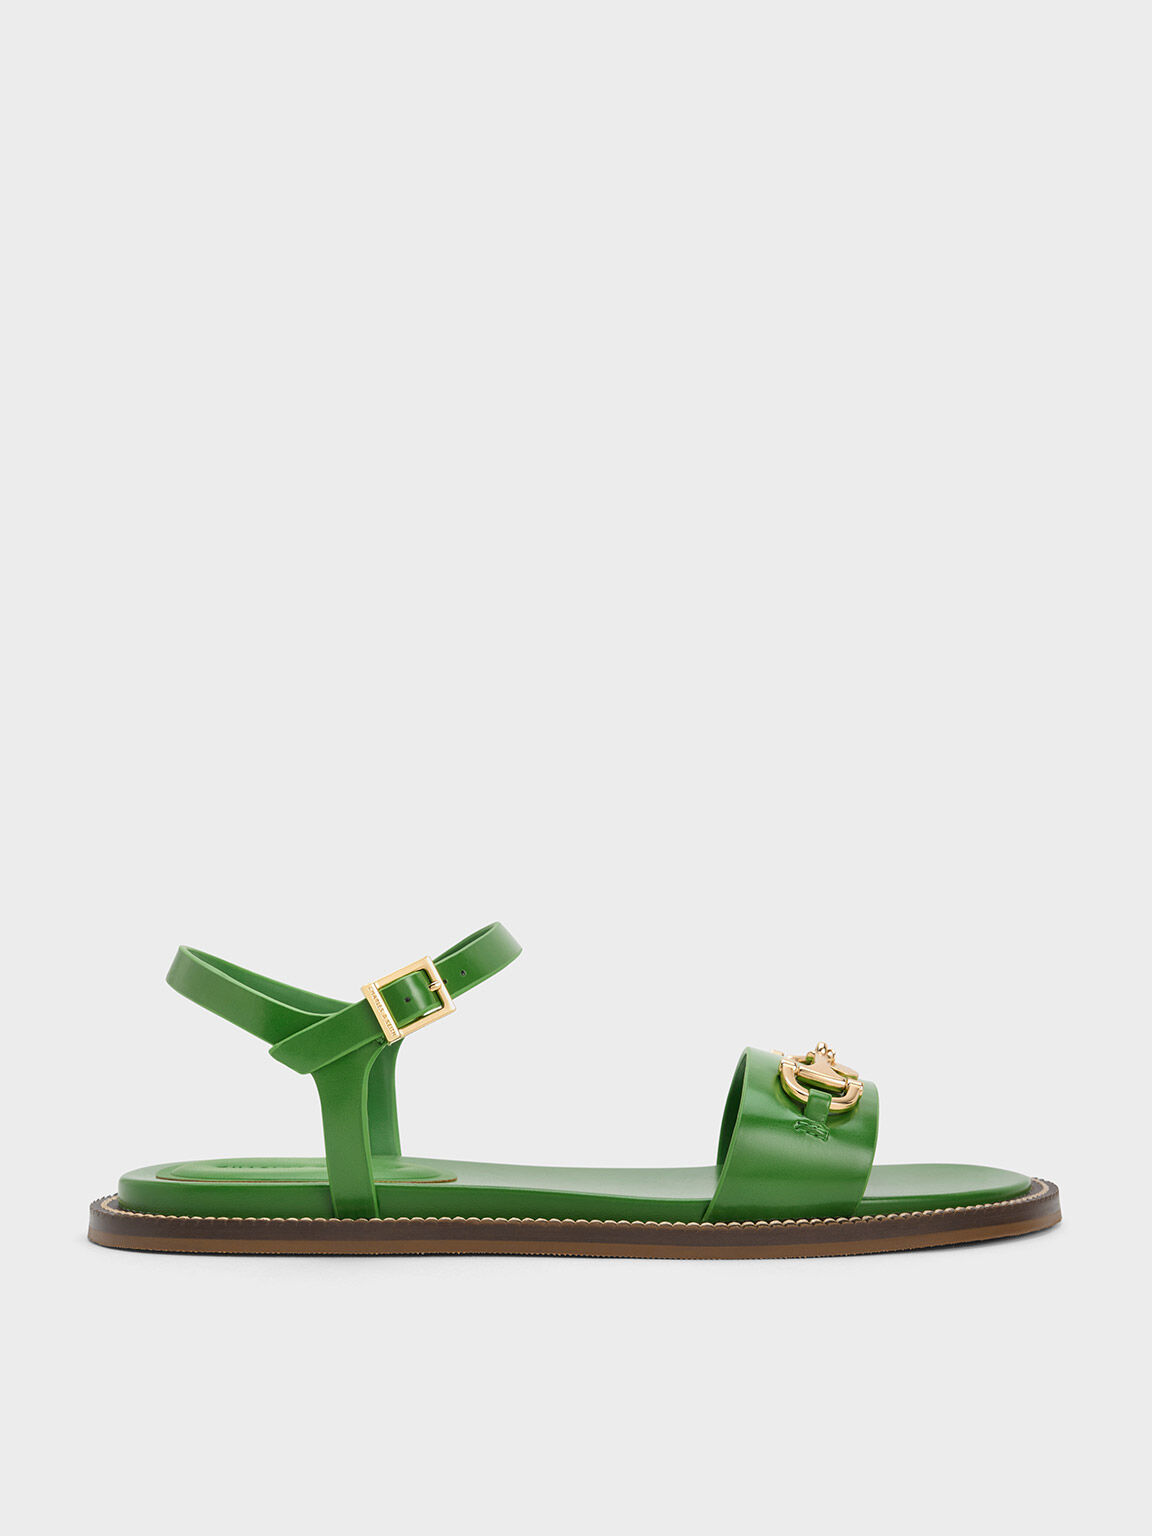 Slip-On, Back-Strap : Flat Sandals for Women : Nuu - 0538NuF – Jhuti